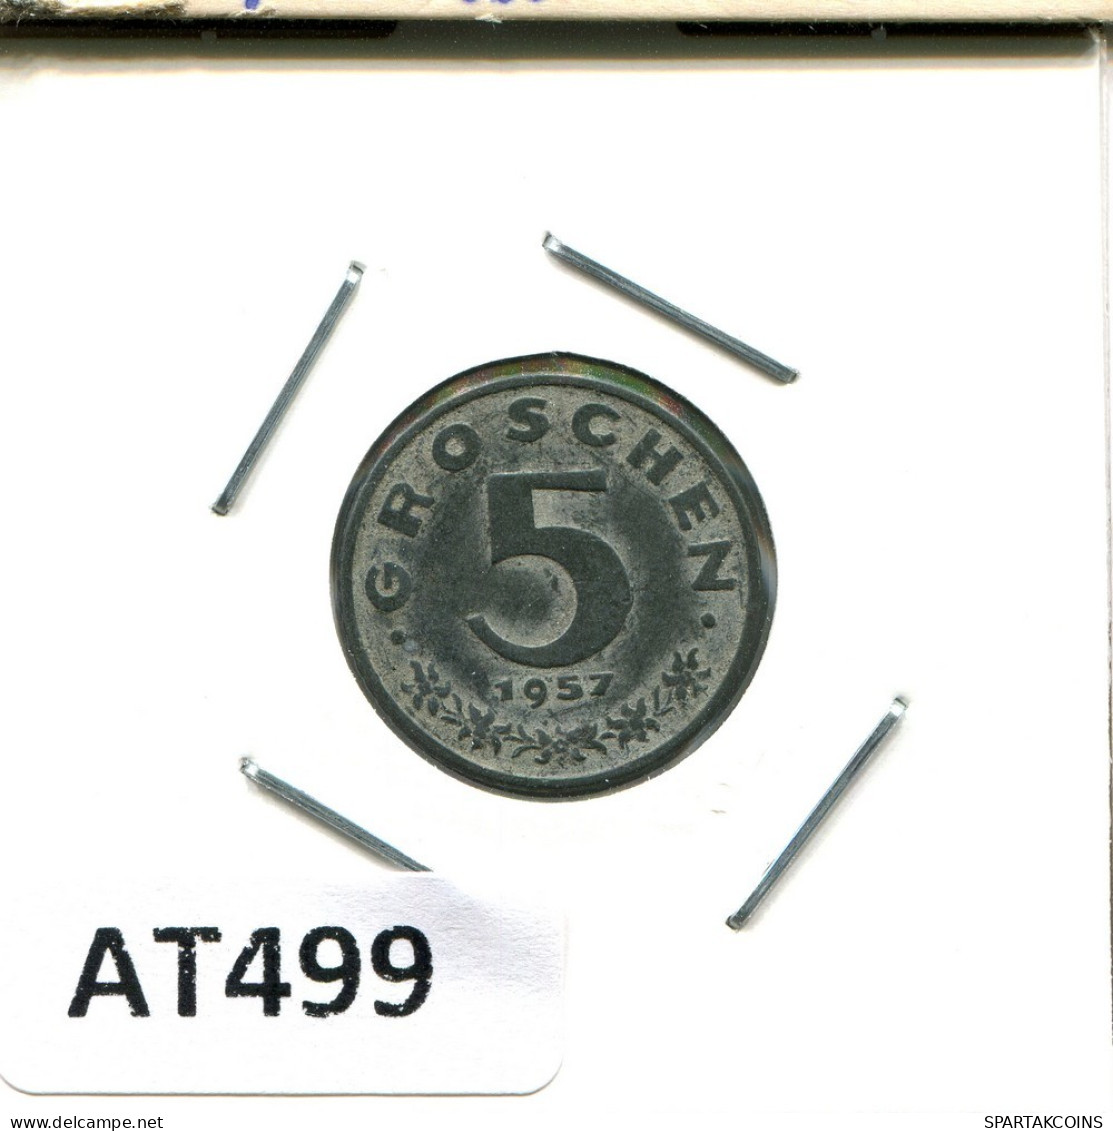 5 GROSCHEN 1957 AUSTRIA Coin #AT499.U.A - Austria